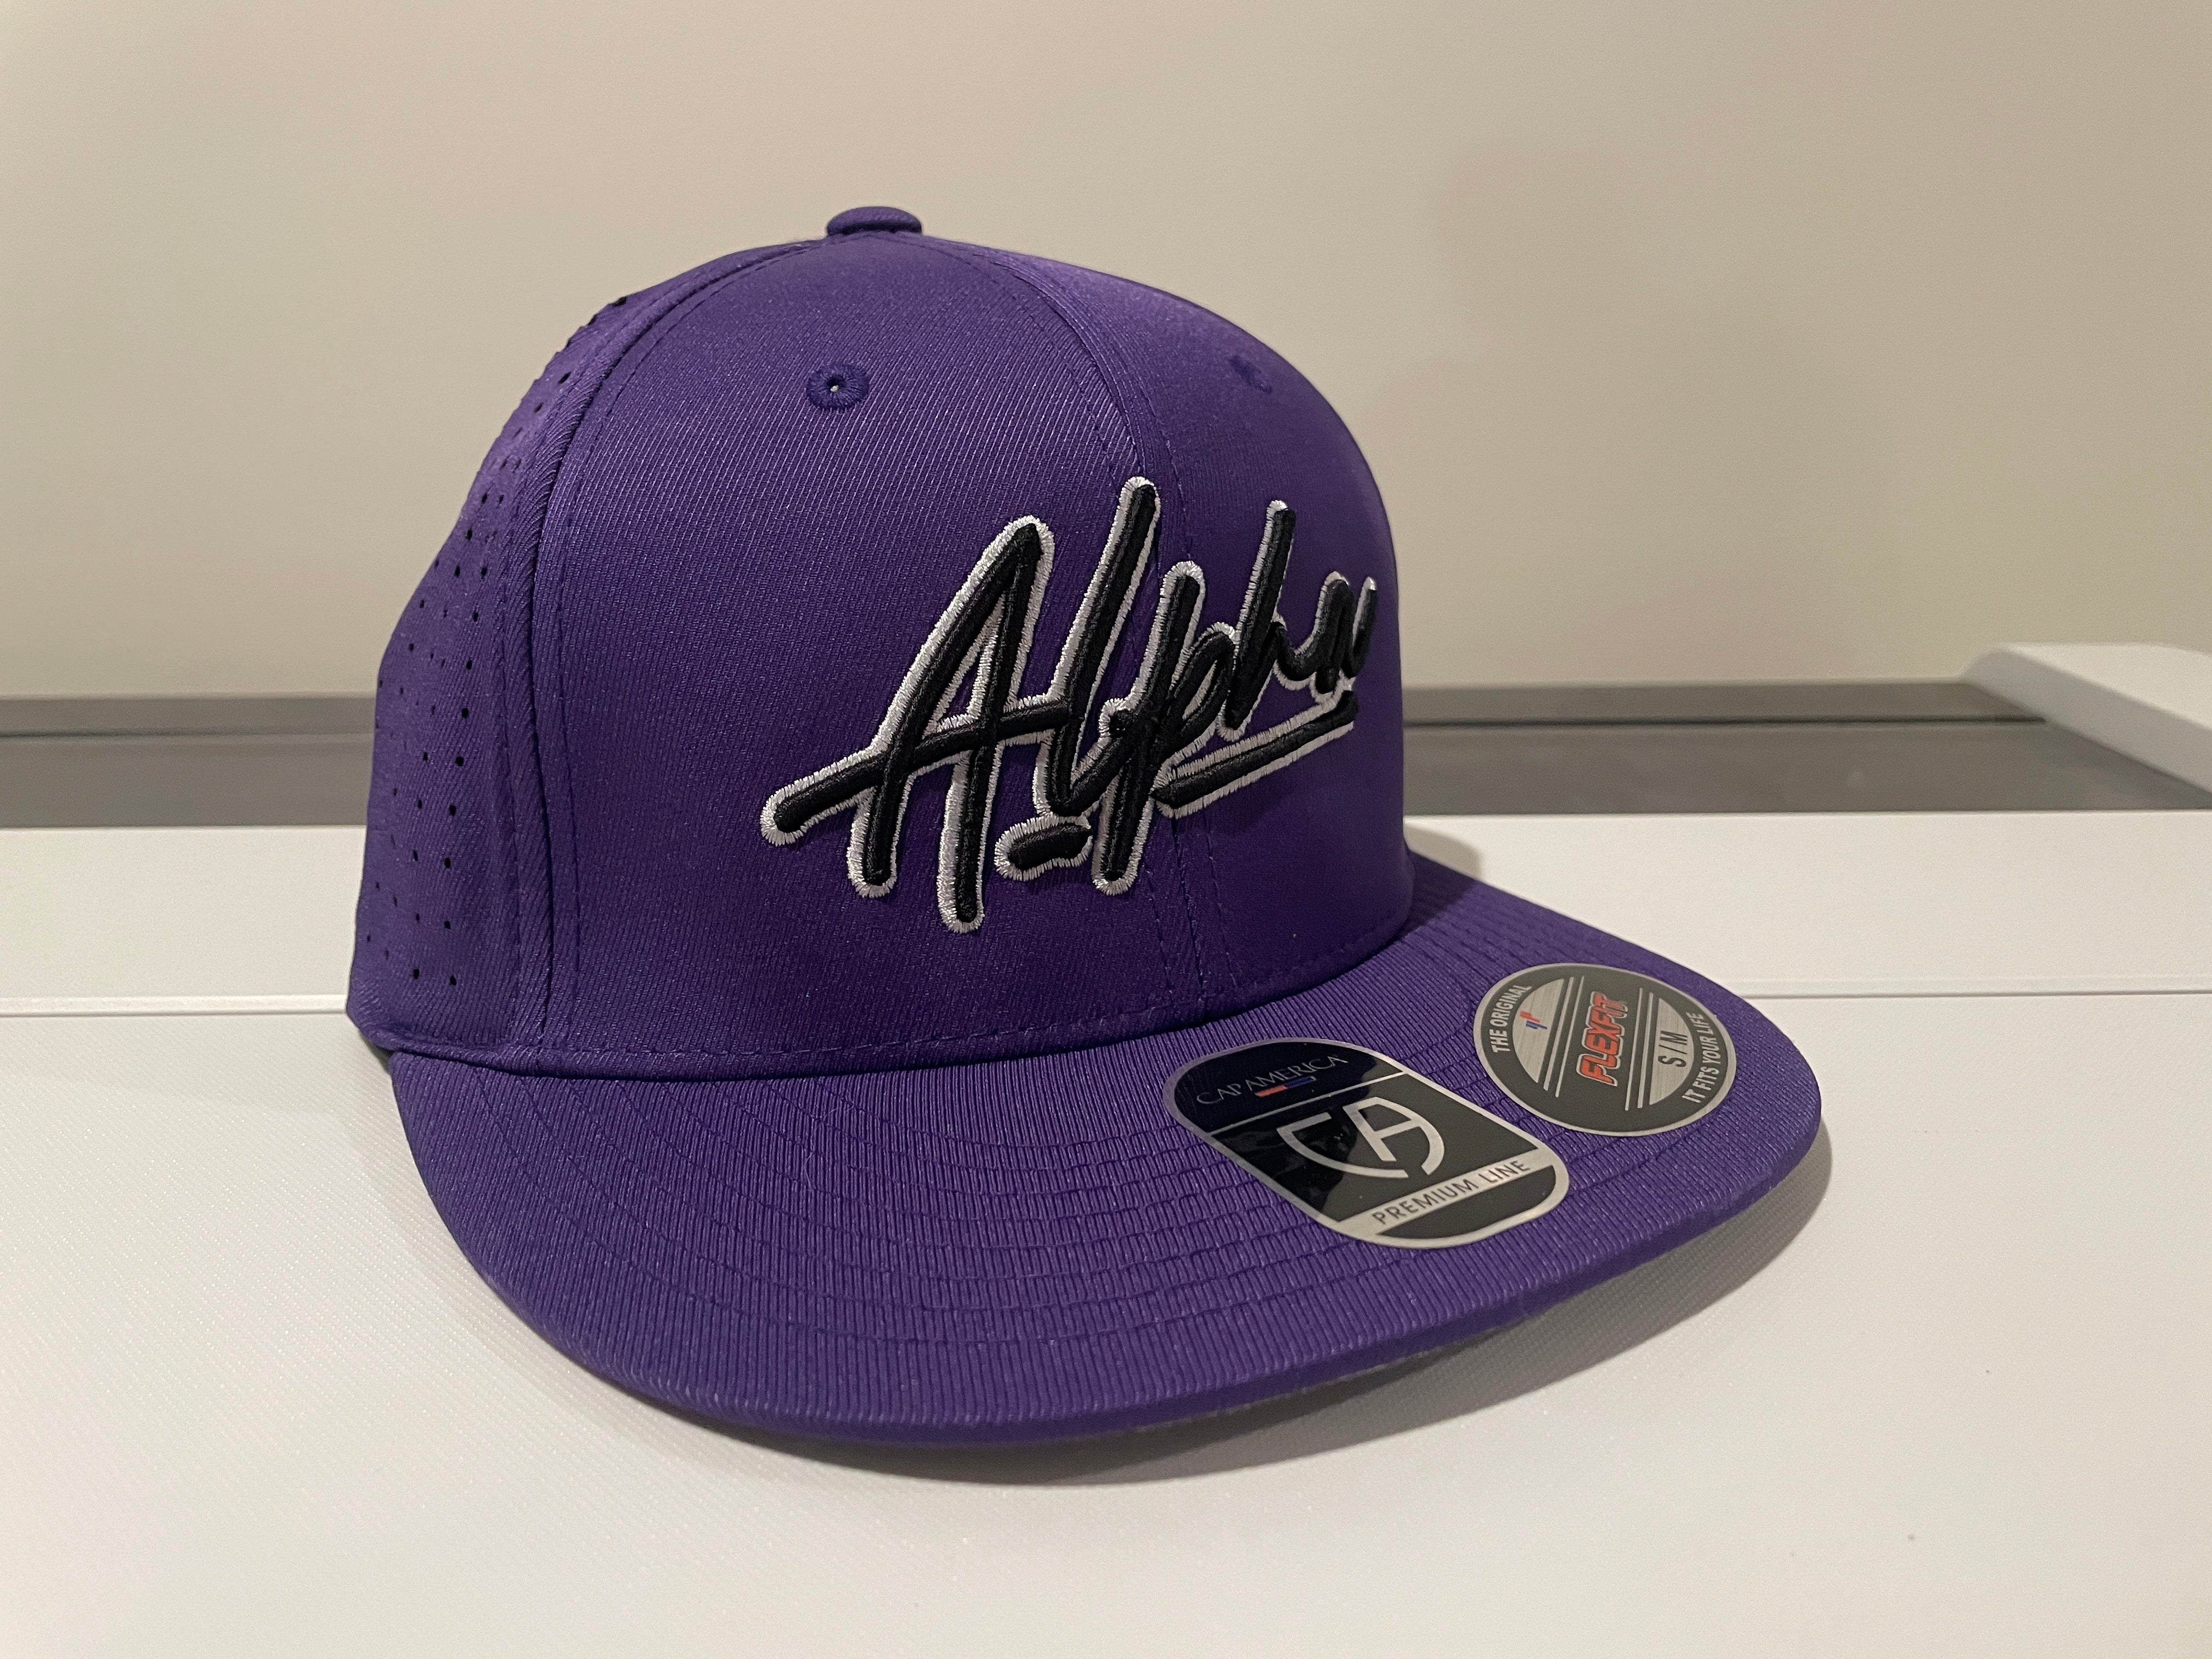 purple la hat